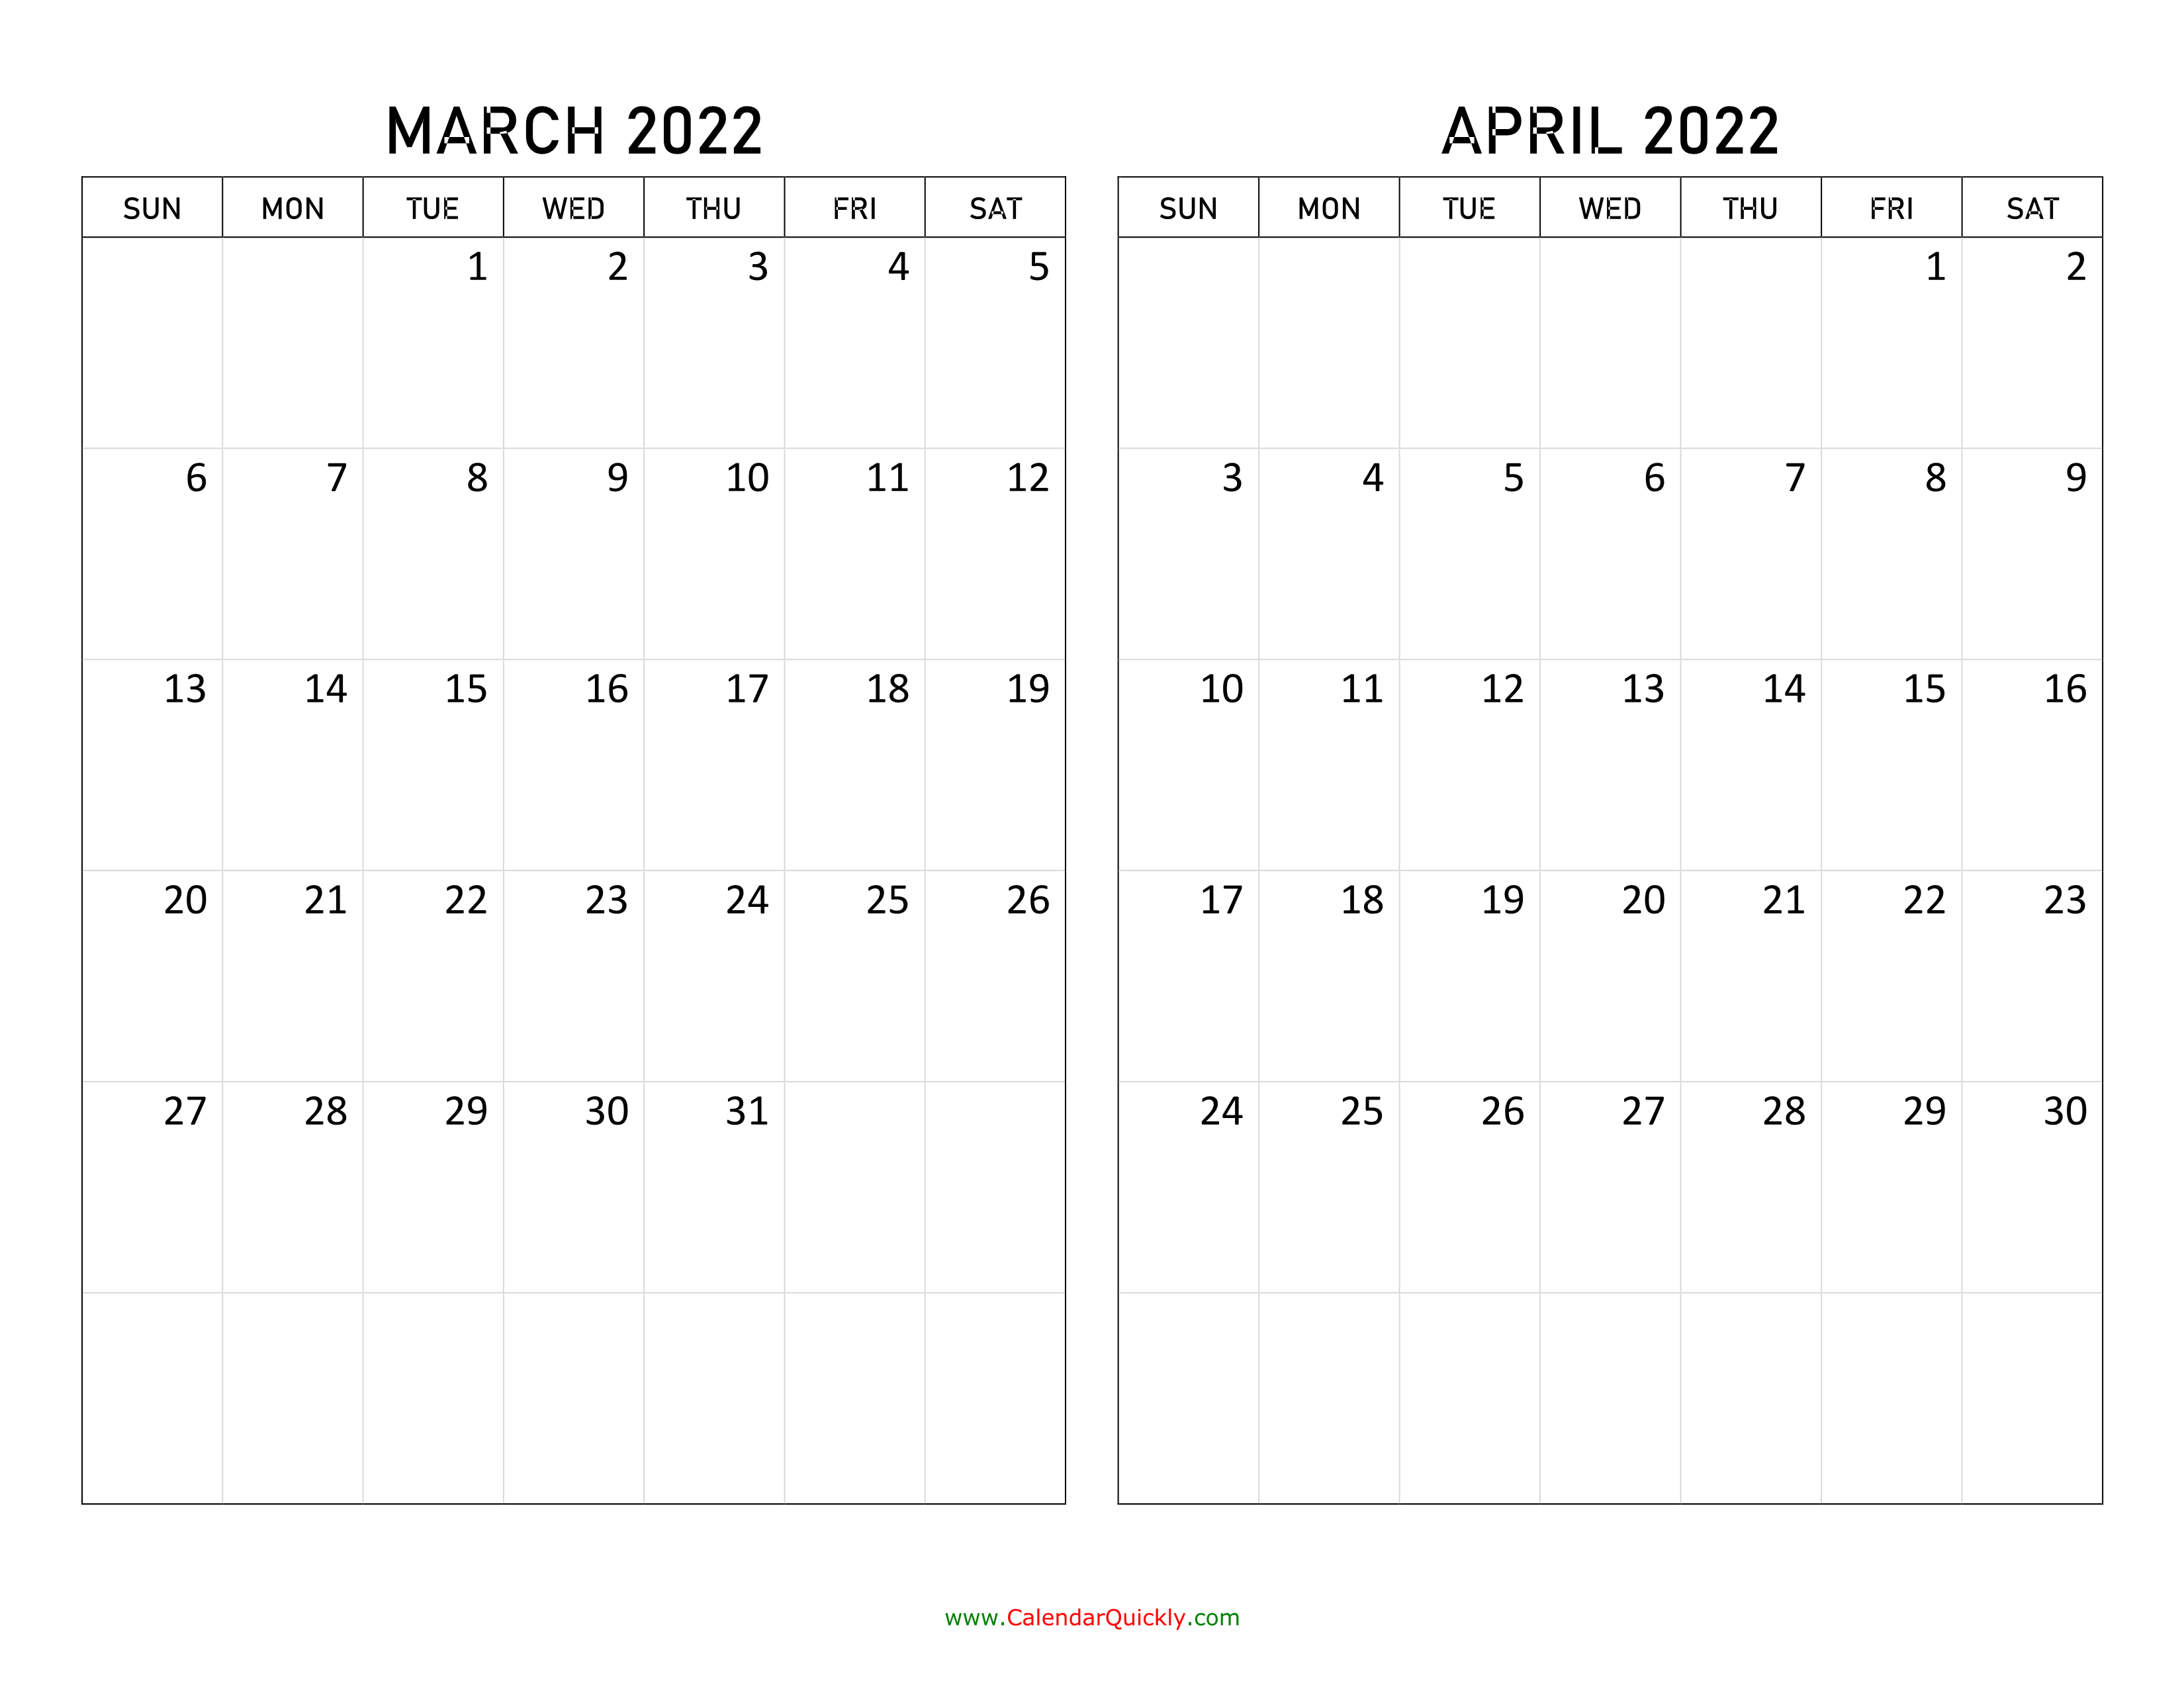 March and April 2022 Calendar Calendar Quickly